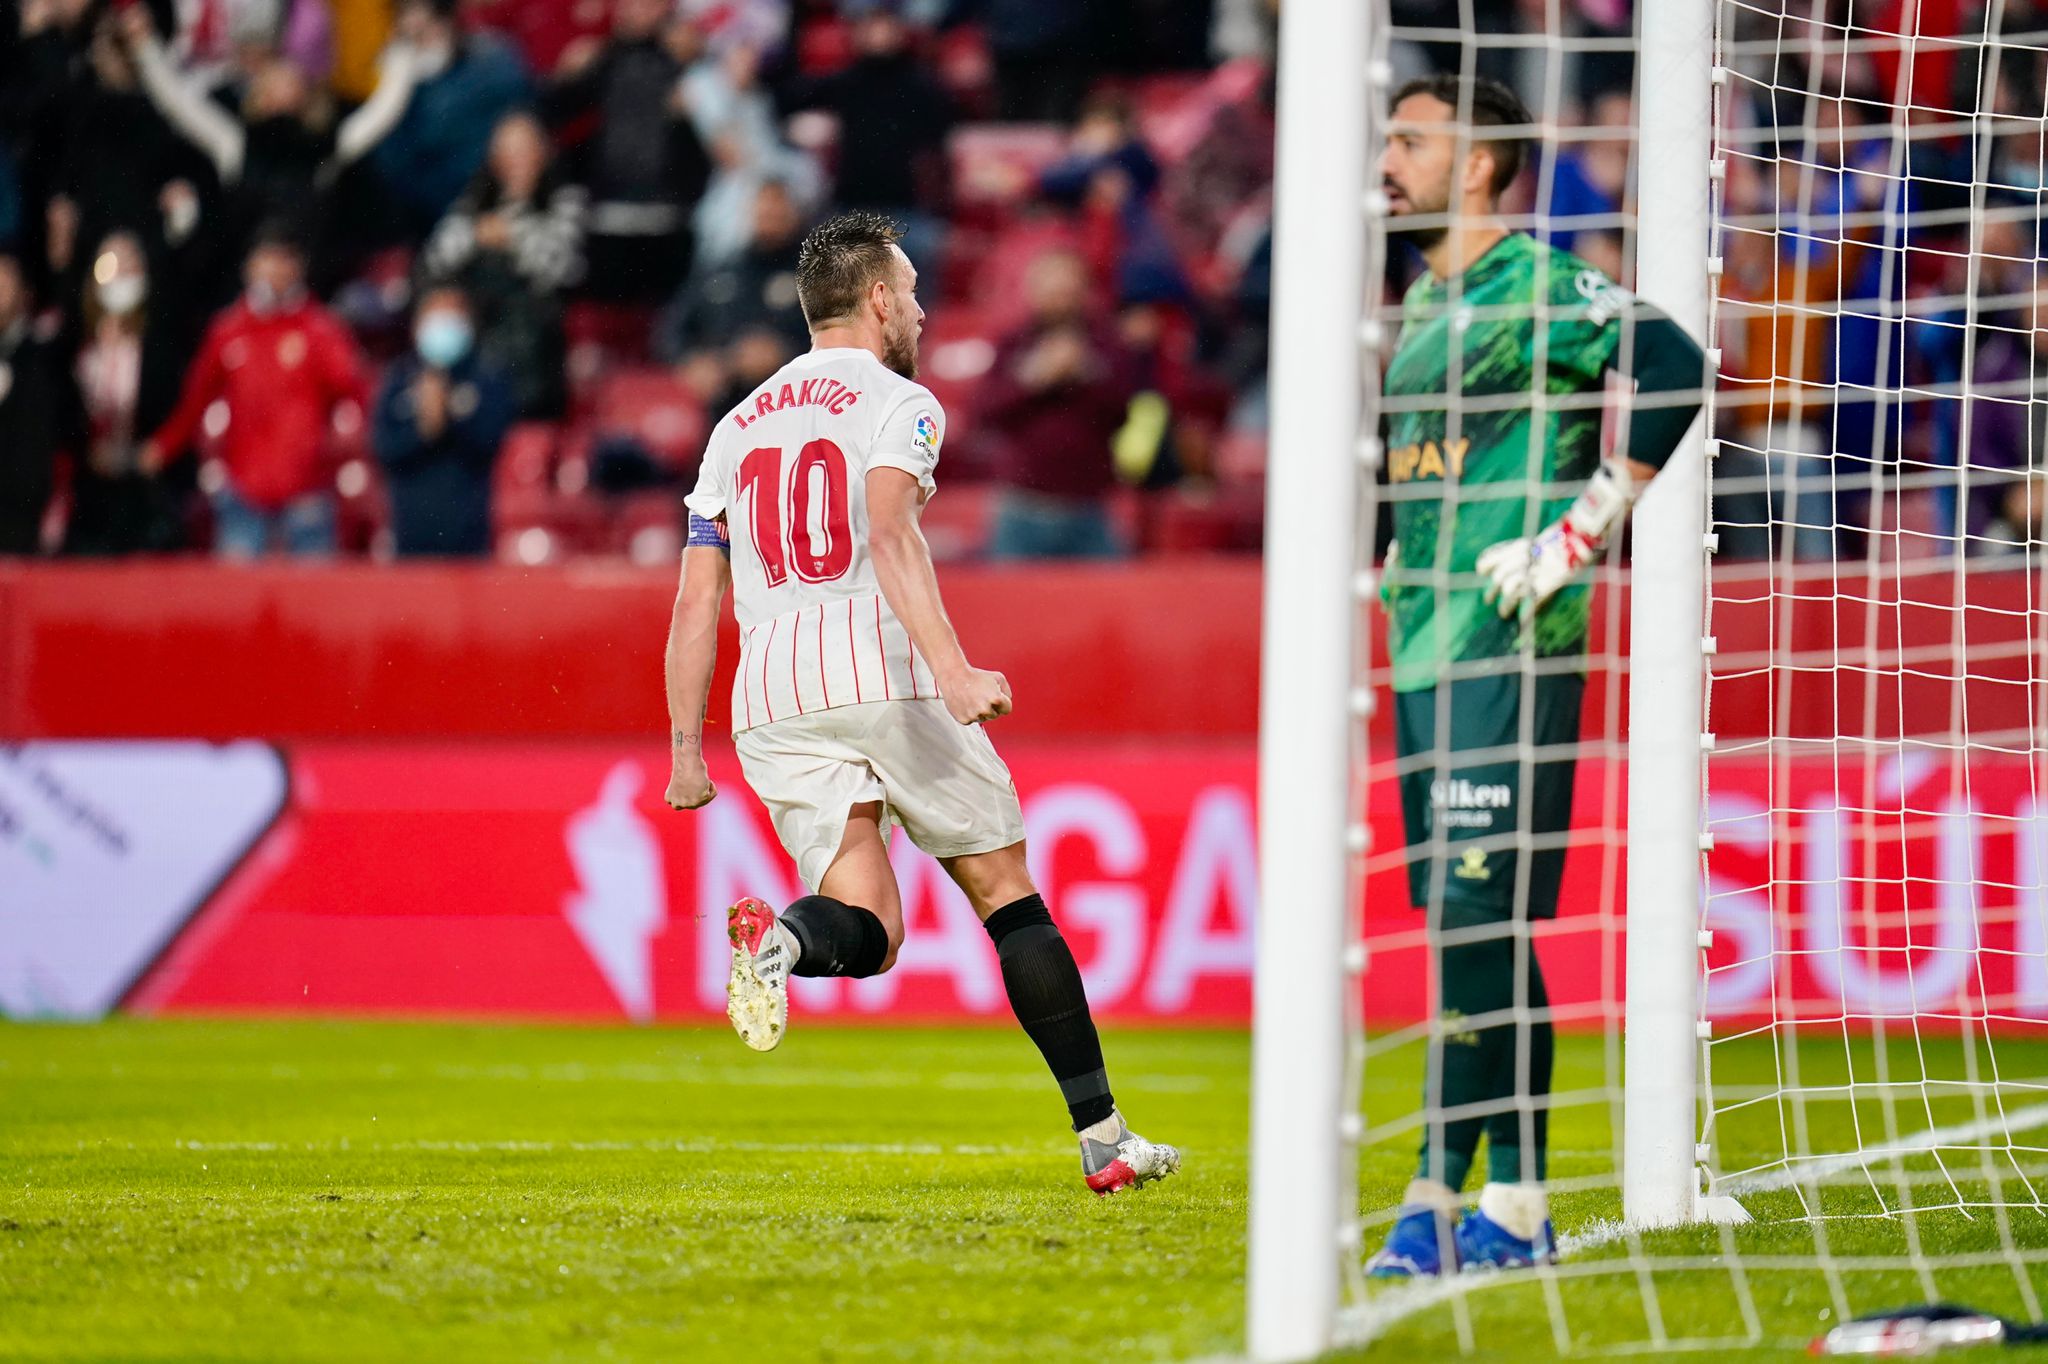 Rakitic celebrates his goal against Alavés